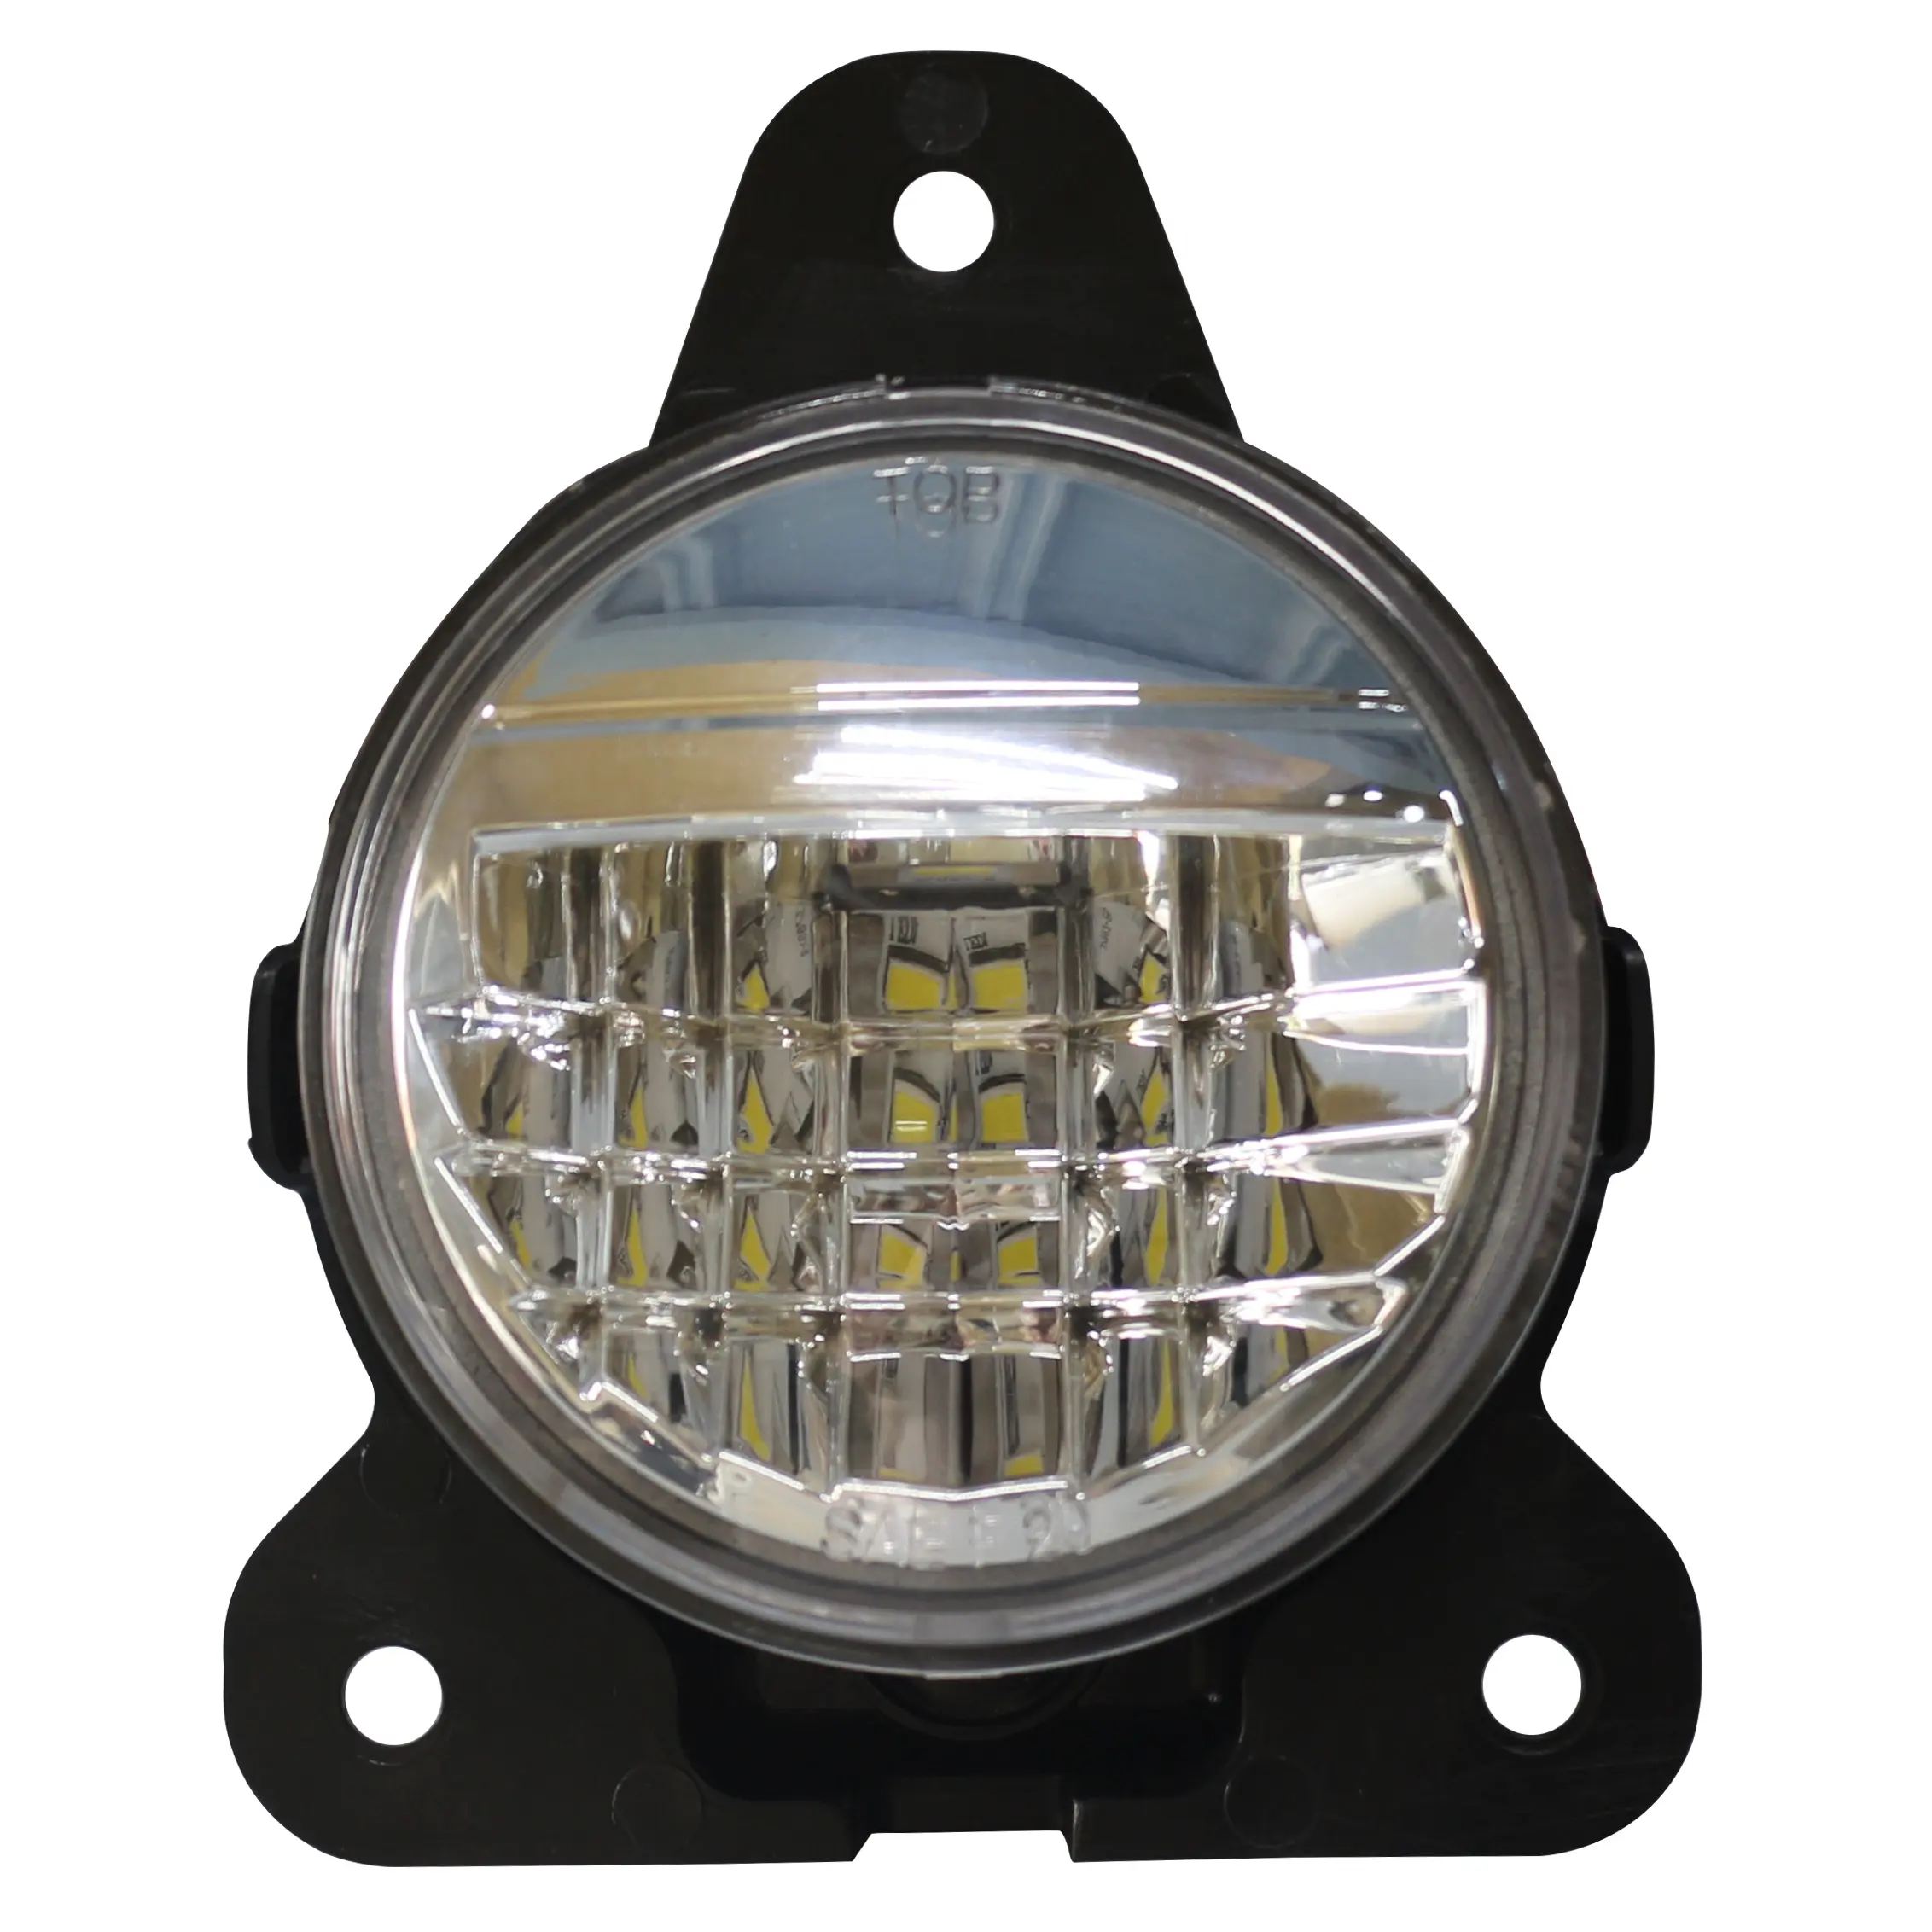 F00916-C LED fog lamp fog light for Vo-lvo VNR 2018+ Trucks,Replace for 82744707,aftermarket truck lamps